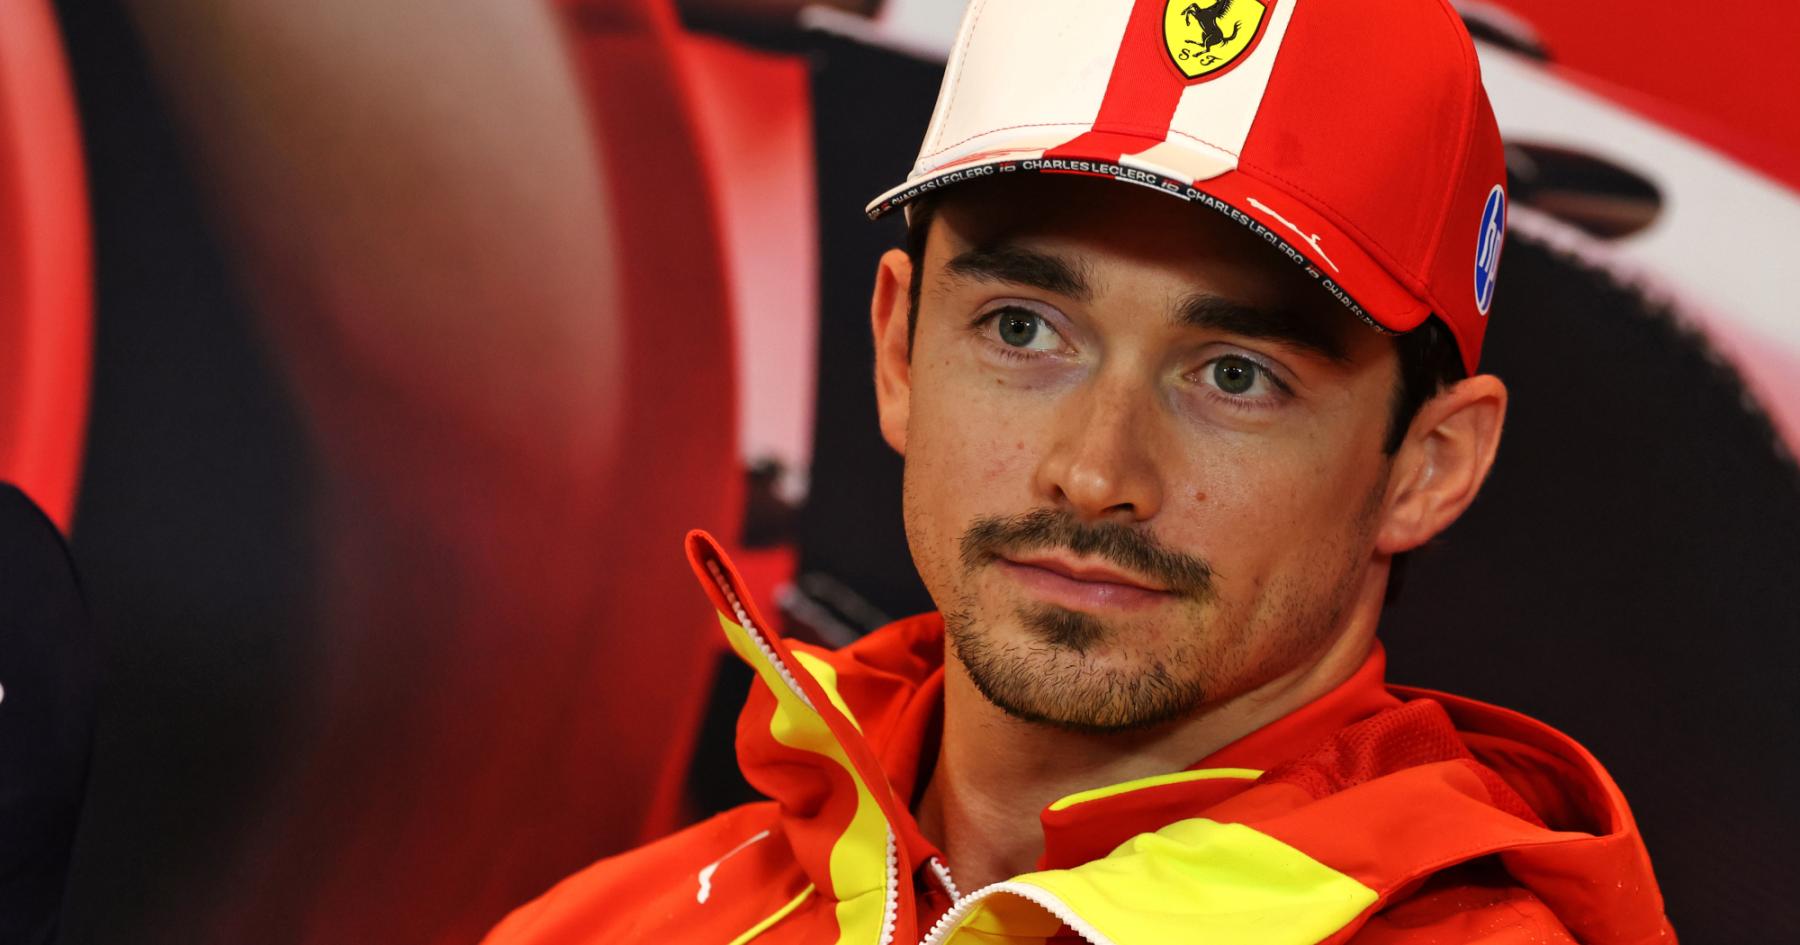 Ferrari's Rising Star: Leclerc Shines as Andretti's Legacy Lives On